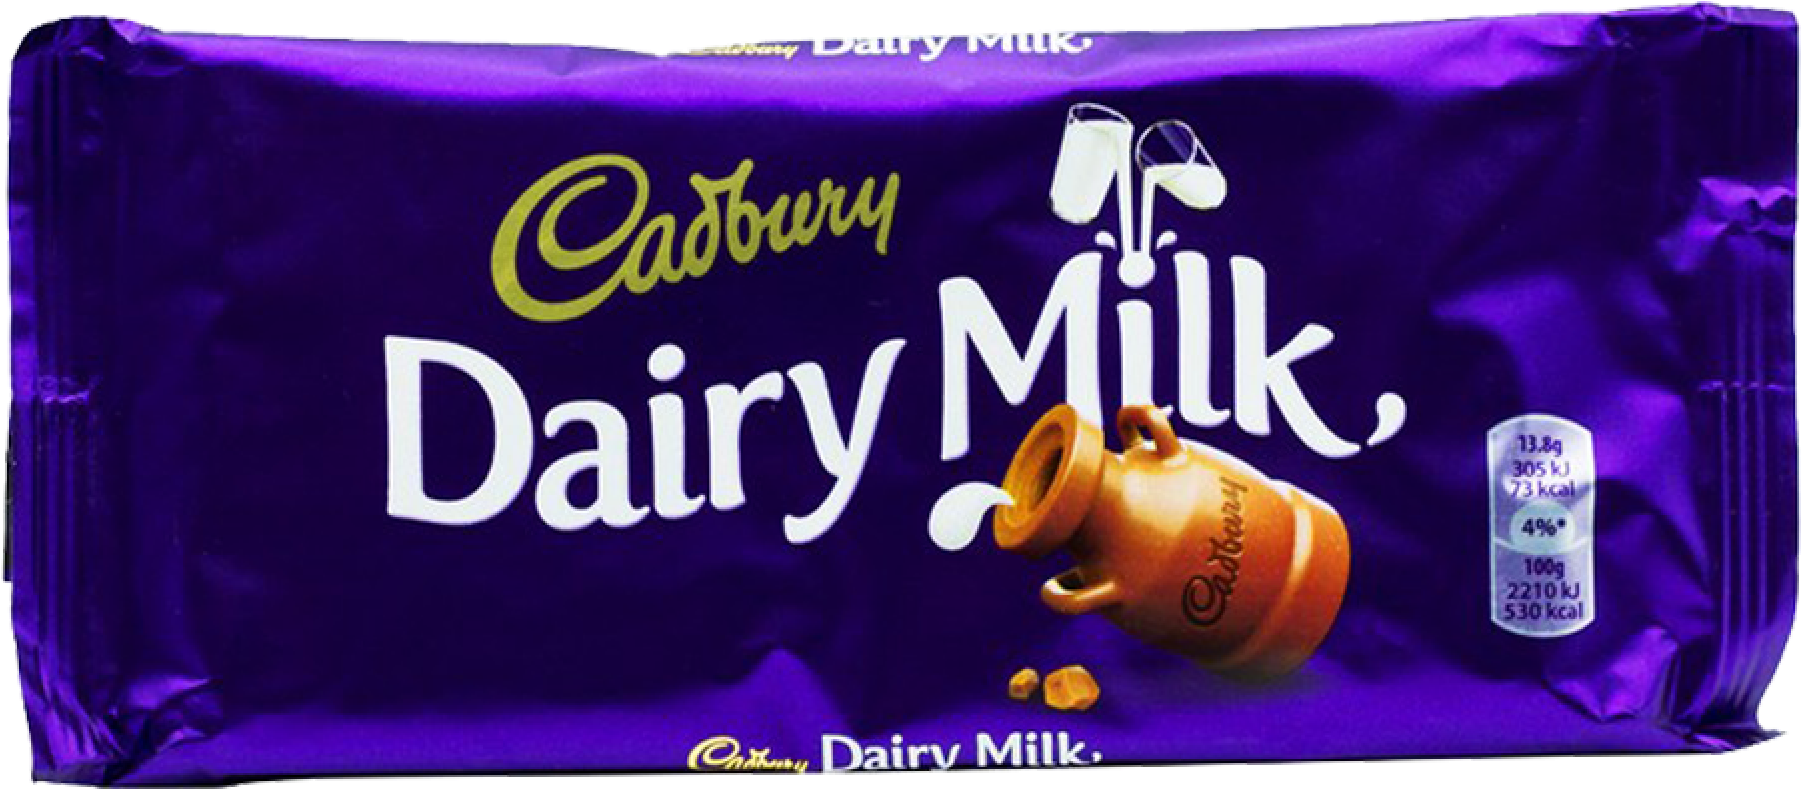 Cadbury Dairy Milk Chocolate Bar PNG